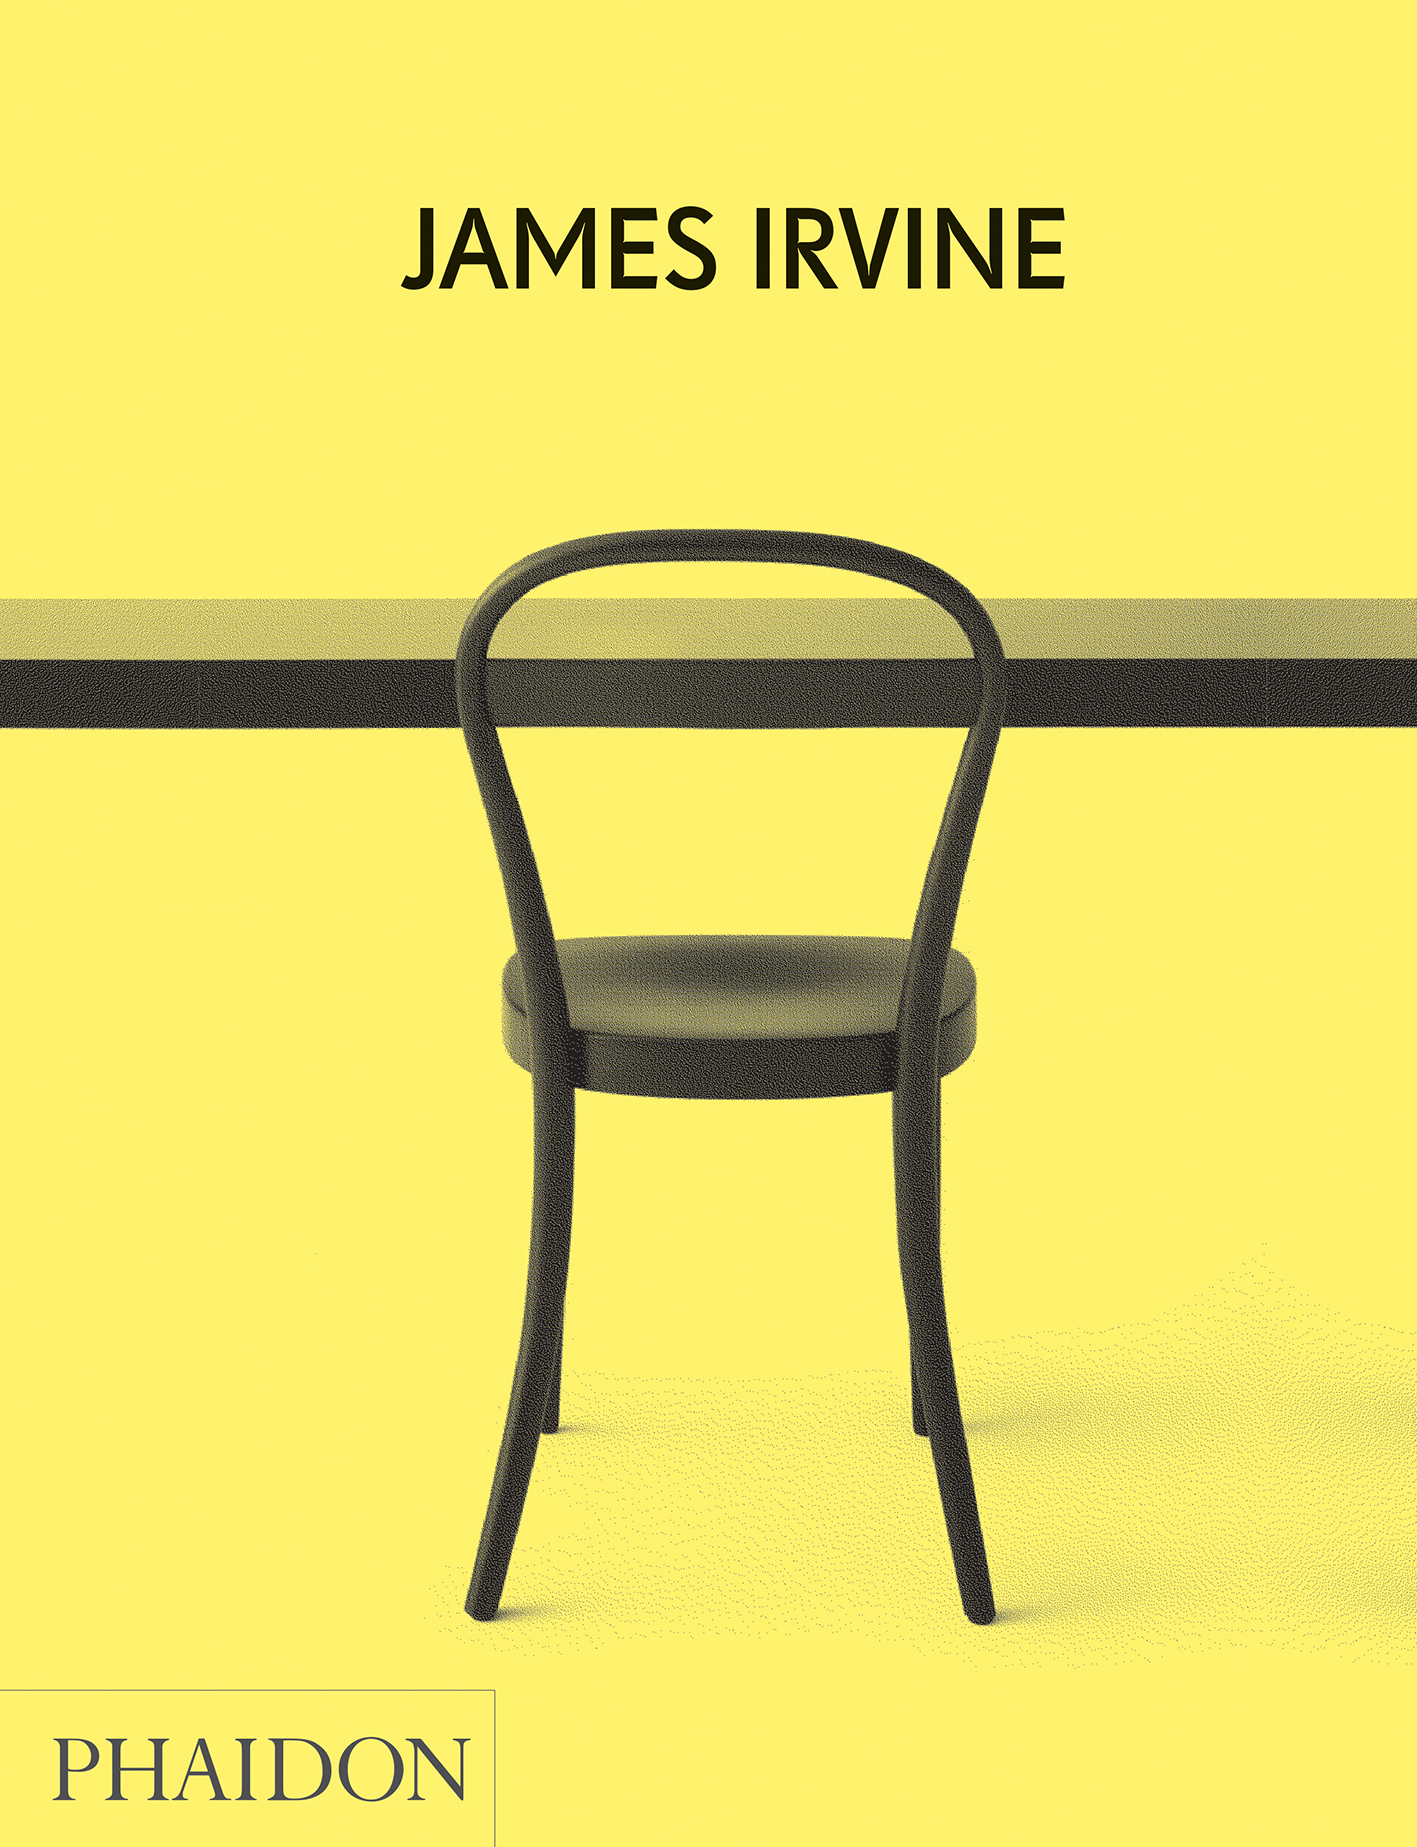 James Irvine. Phaidon, 2015.